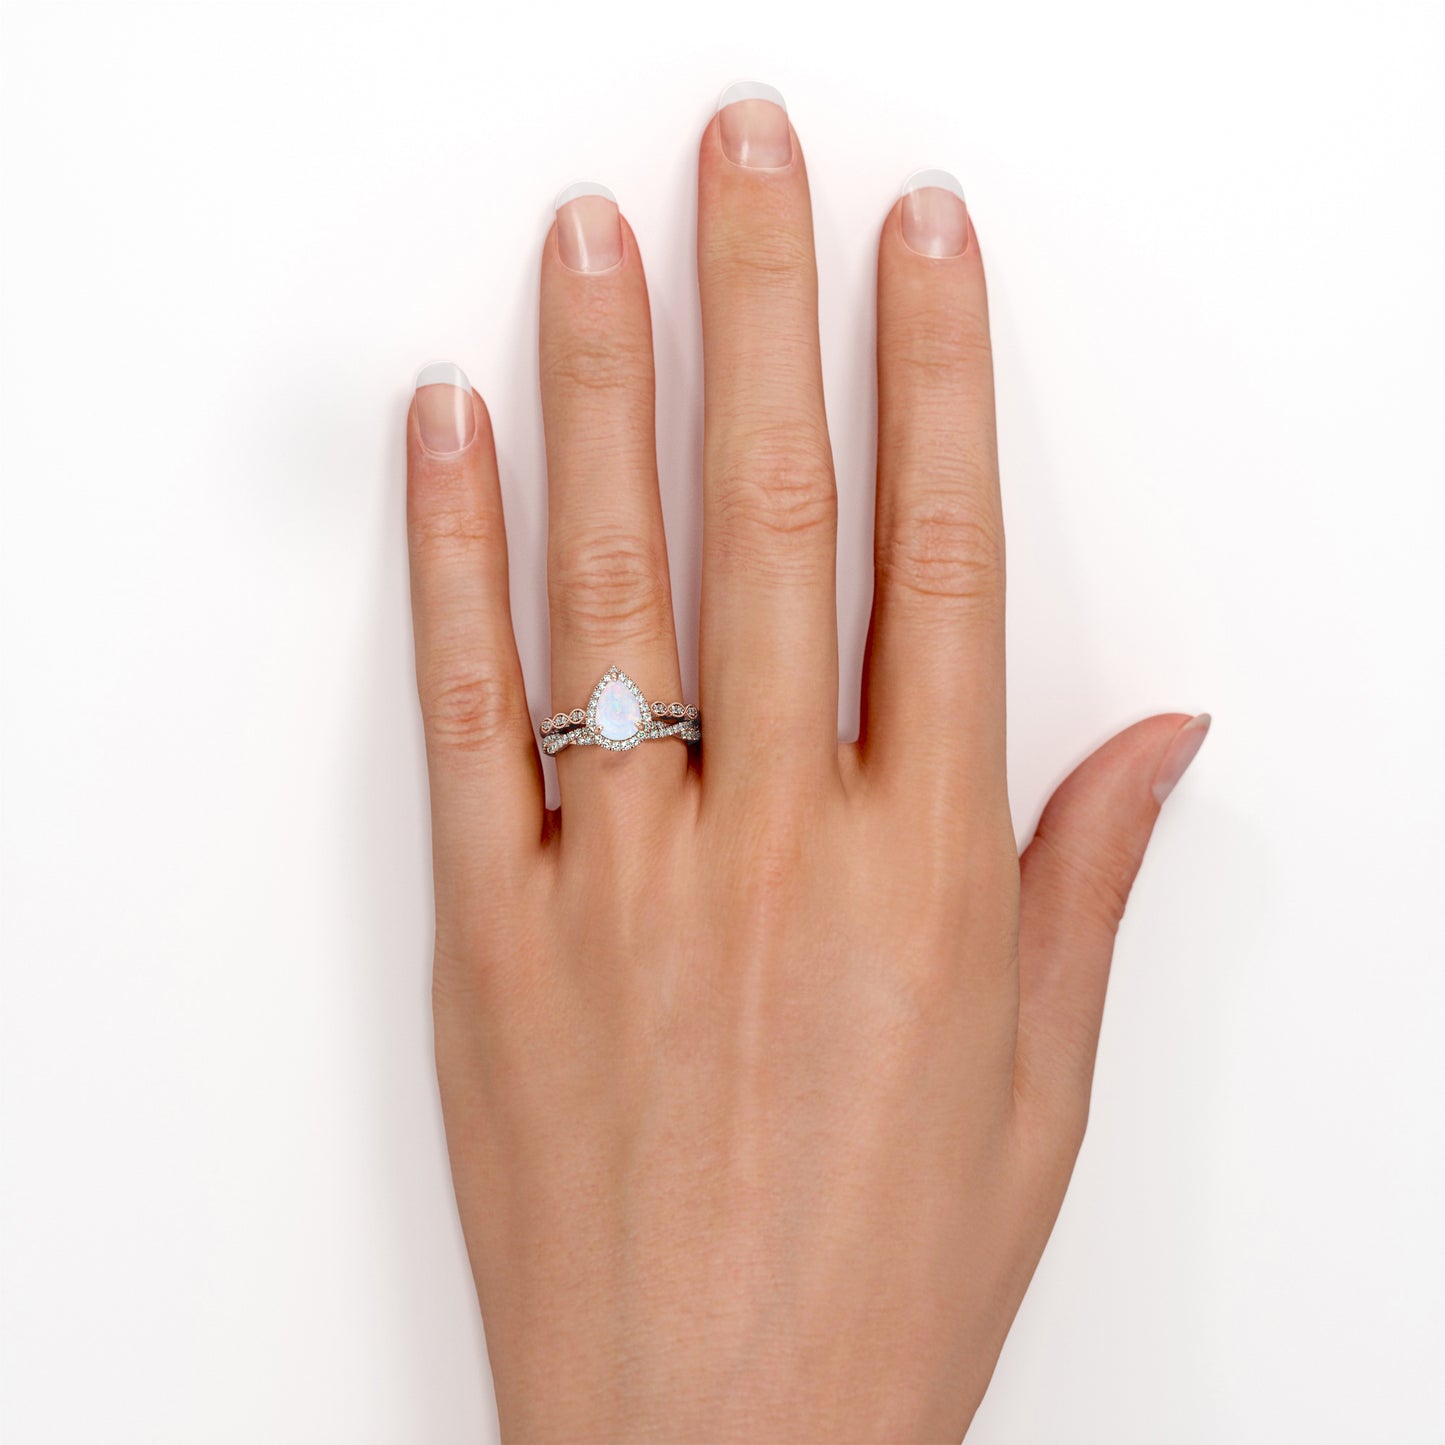 Halo-Infinity Pear cut 1.65 carat Ethiopian Opal and diamond Art deco inspired Wedding Bridal ring set